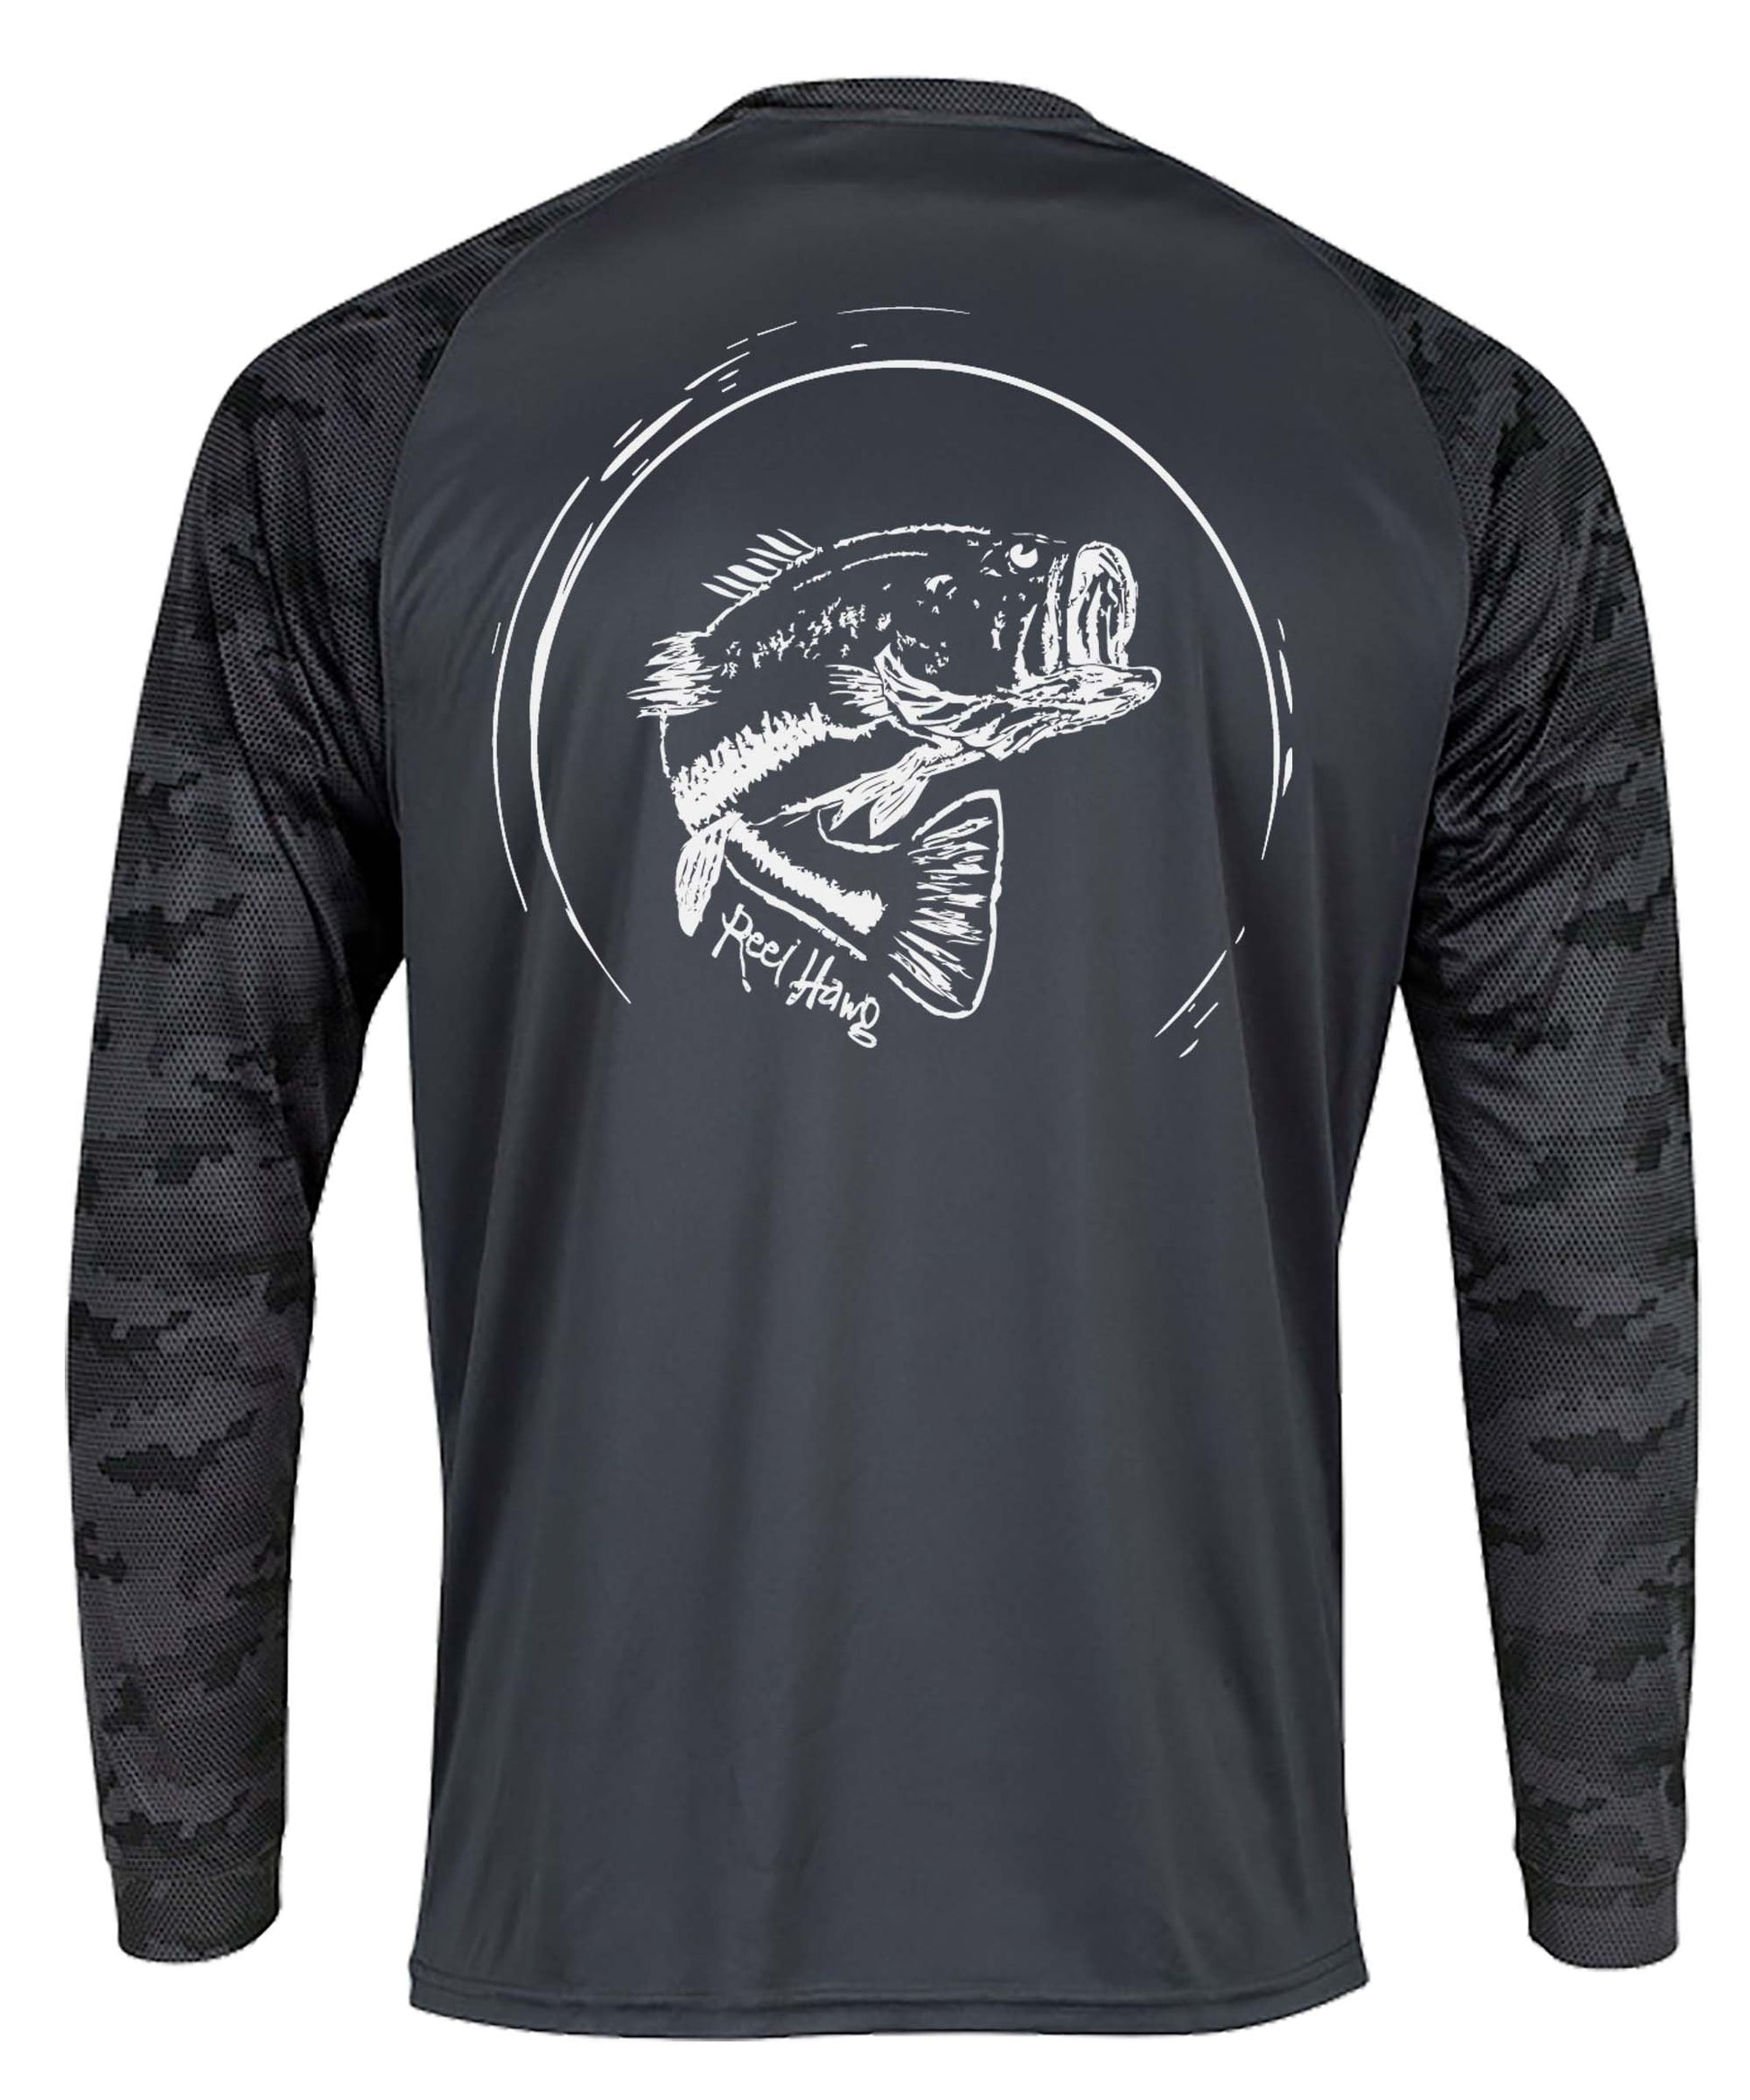 Bass fishing "Reel Hawg" graphite performance digital camo long sleeve shirt with 50+ UV sun protection by Reel Fishy